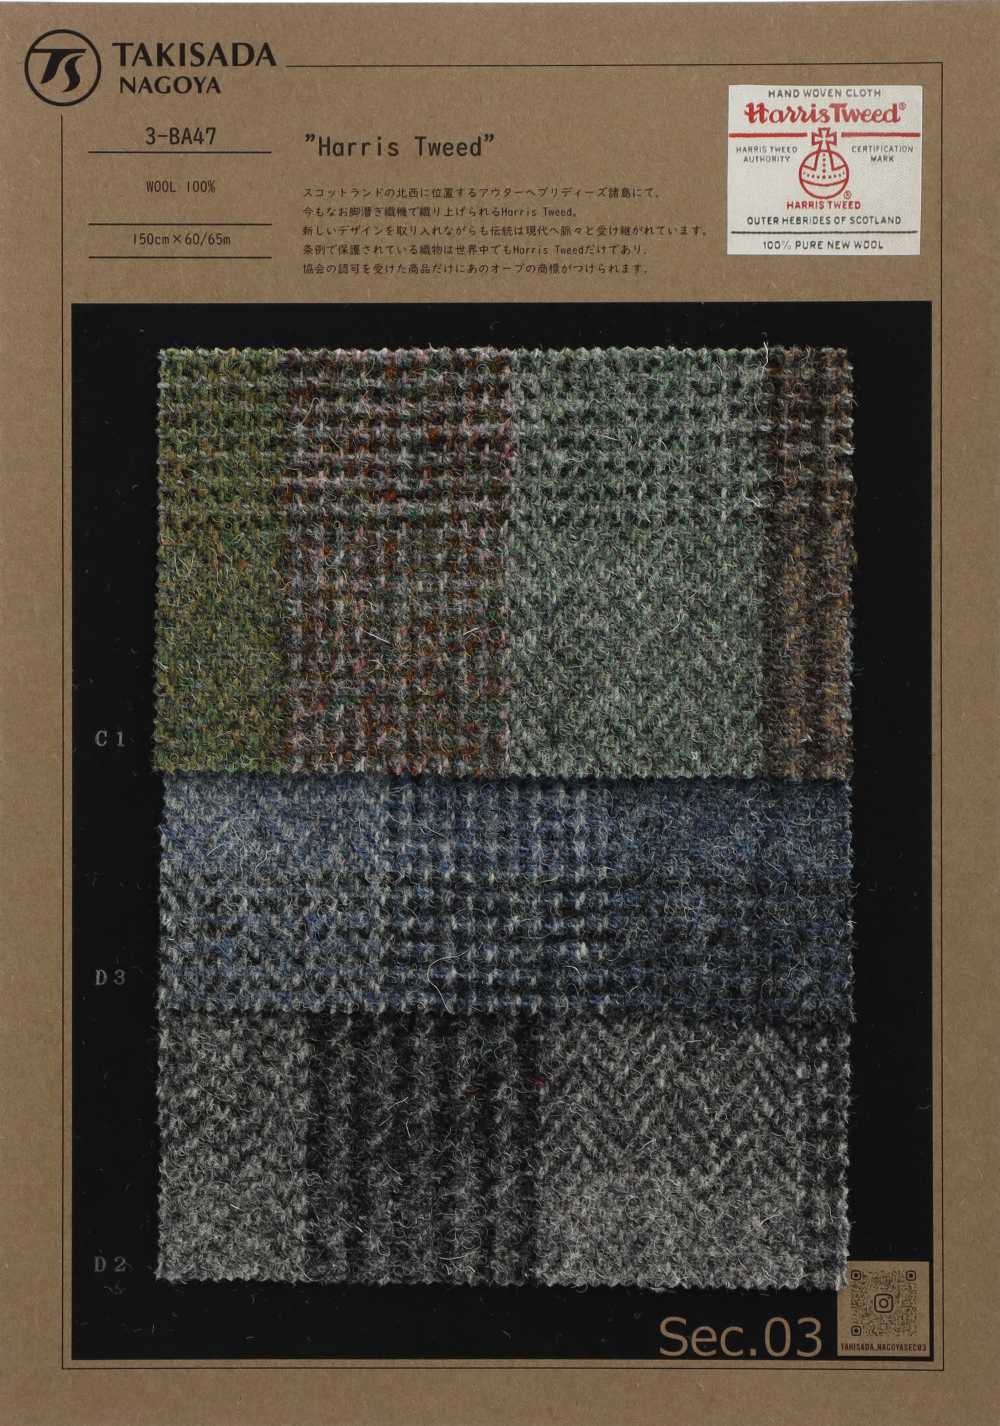 3-BA47 HARRIS Harris Tweed à Carreaux à Chevrons[Fabrication De Textile] Takisada Nagoya